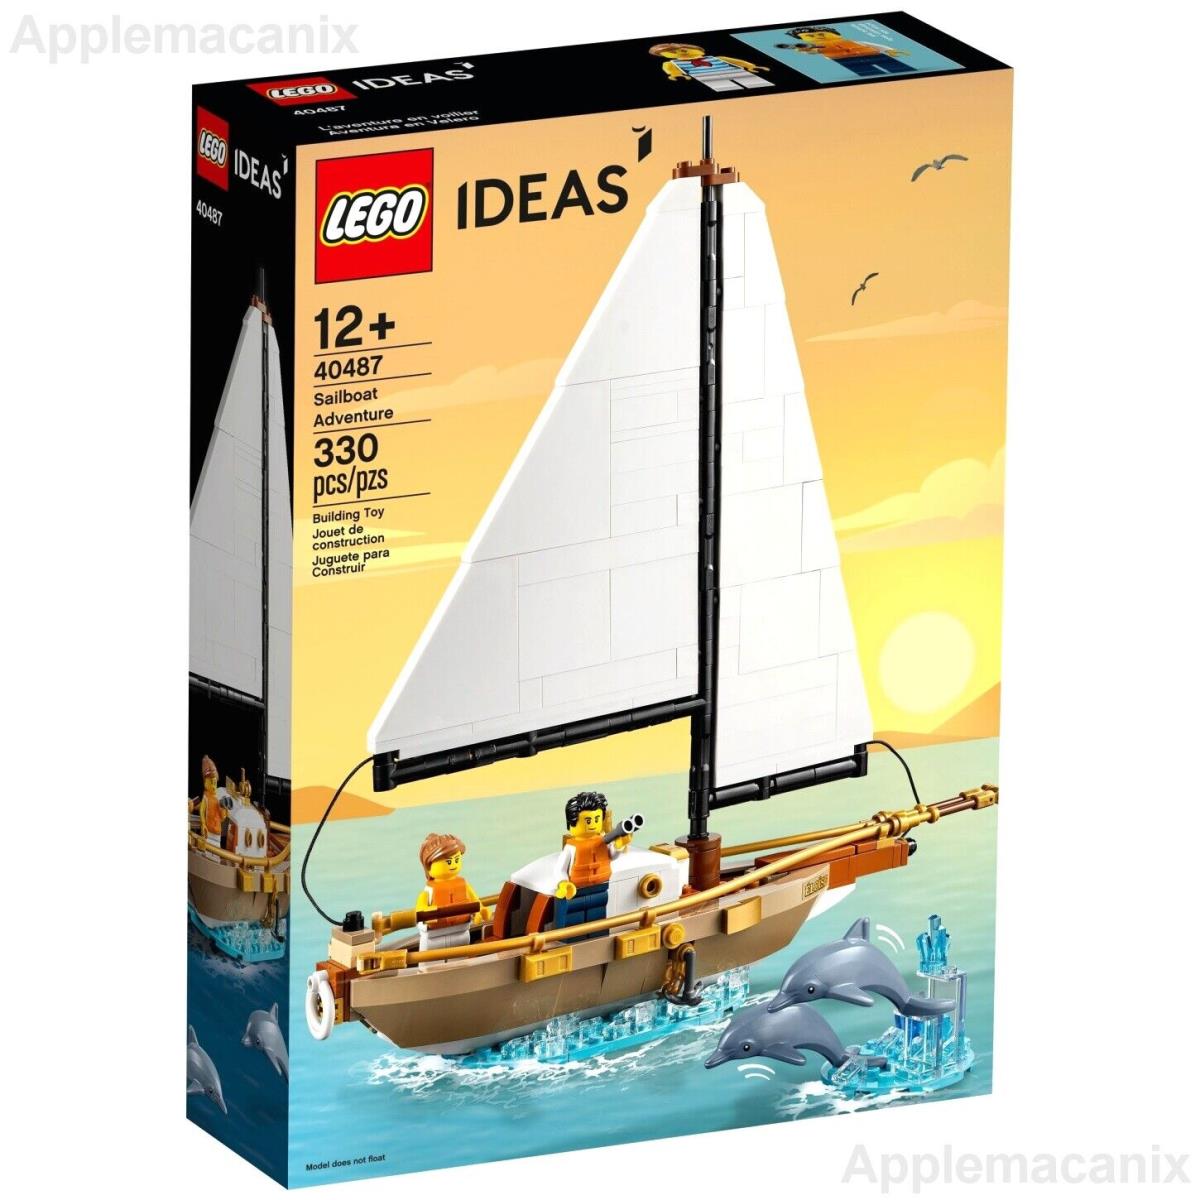 Lego 40487 Sailboat Adventure Ideas Promo Exclusive Building Toy Set